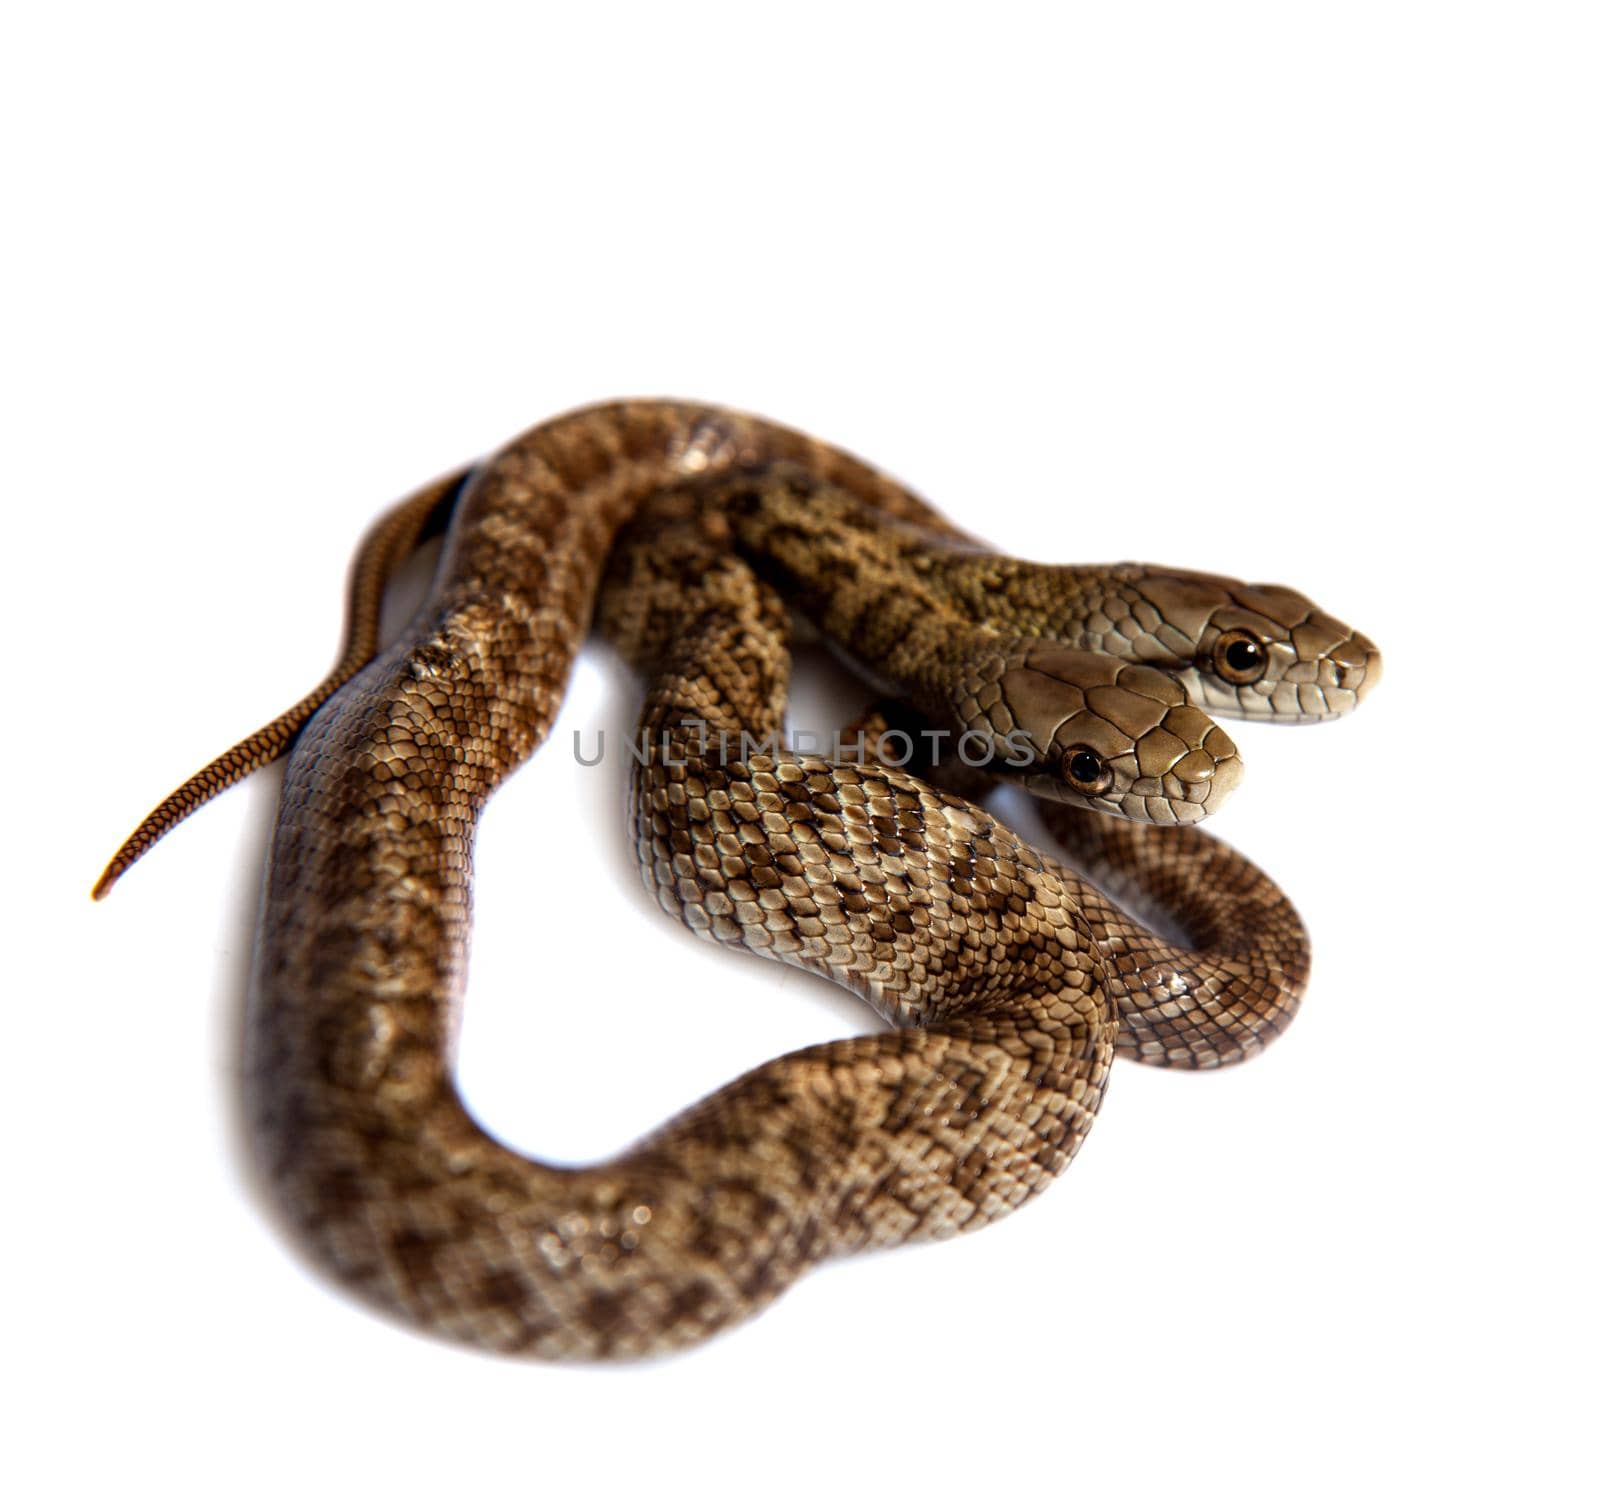 The two headed Japanese rat snake, Elaphe climacophora, on white by RosaJay